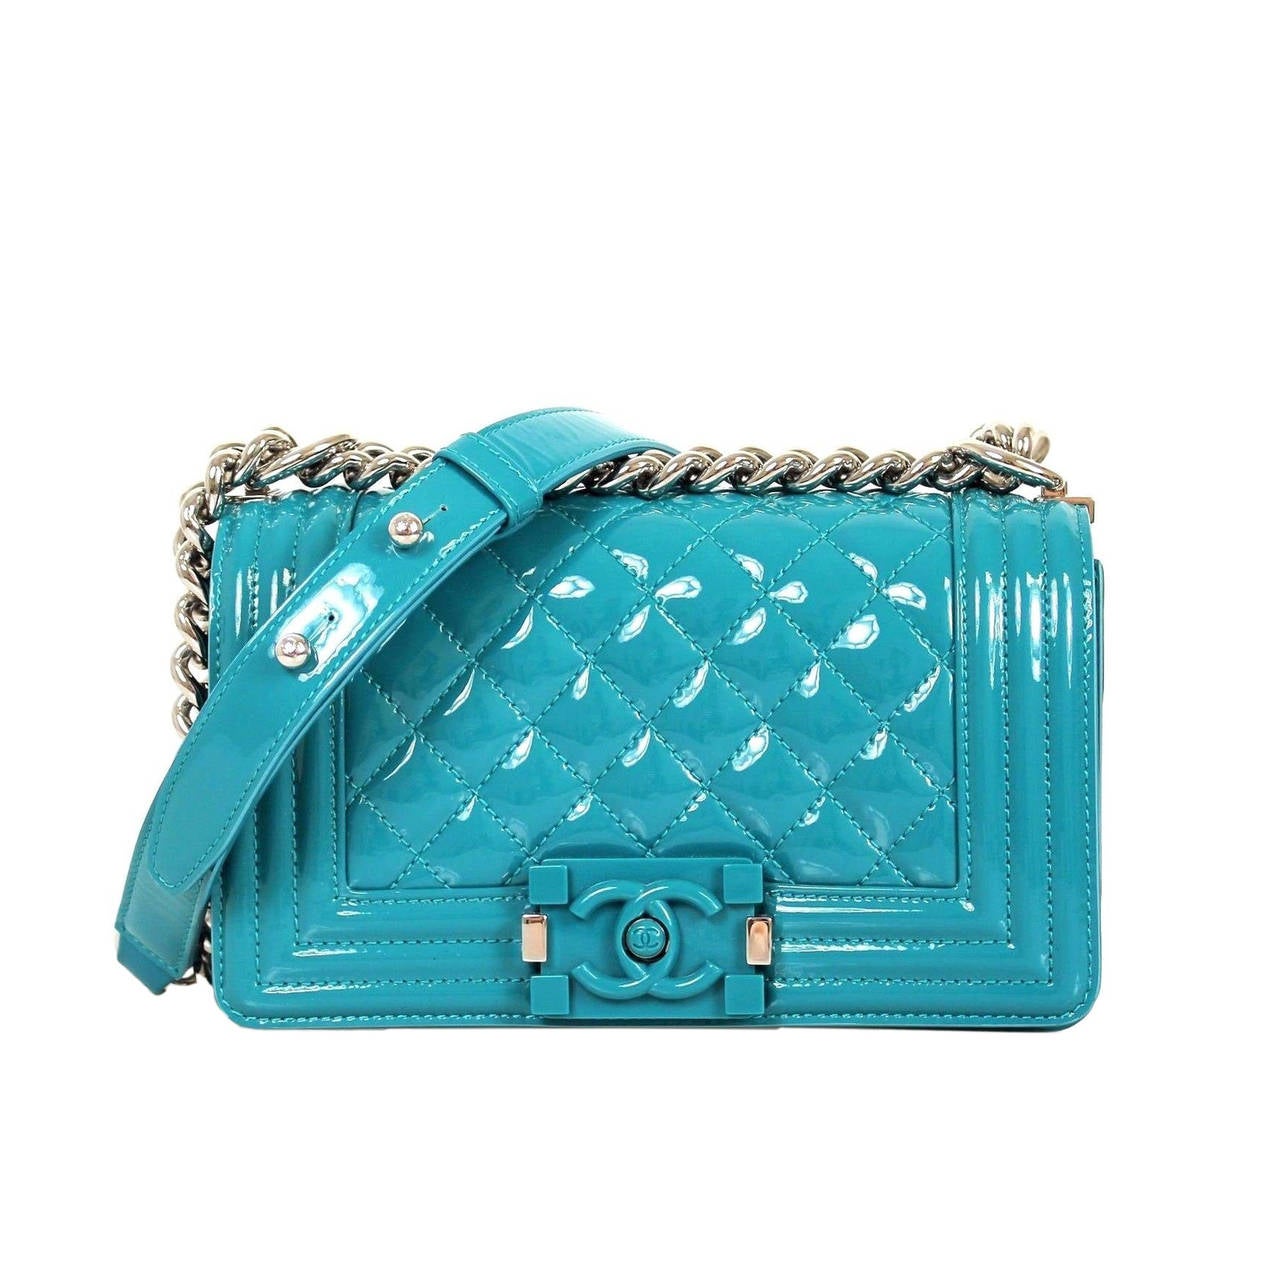 Chanel Lagoon Blue Aqua Quilted Patent Leather 2015 Plexiglass Boy Shoulder Bag For Sale